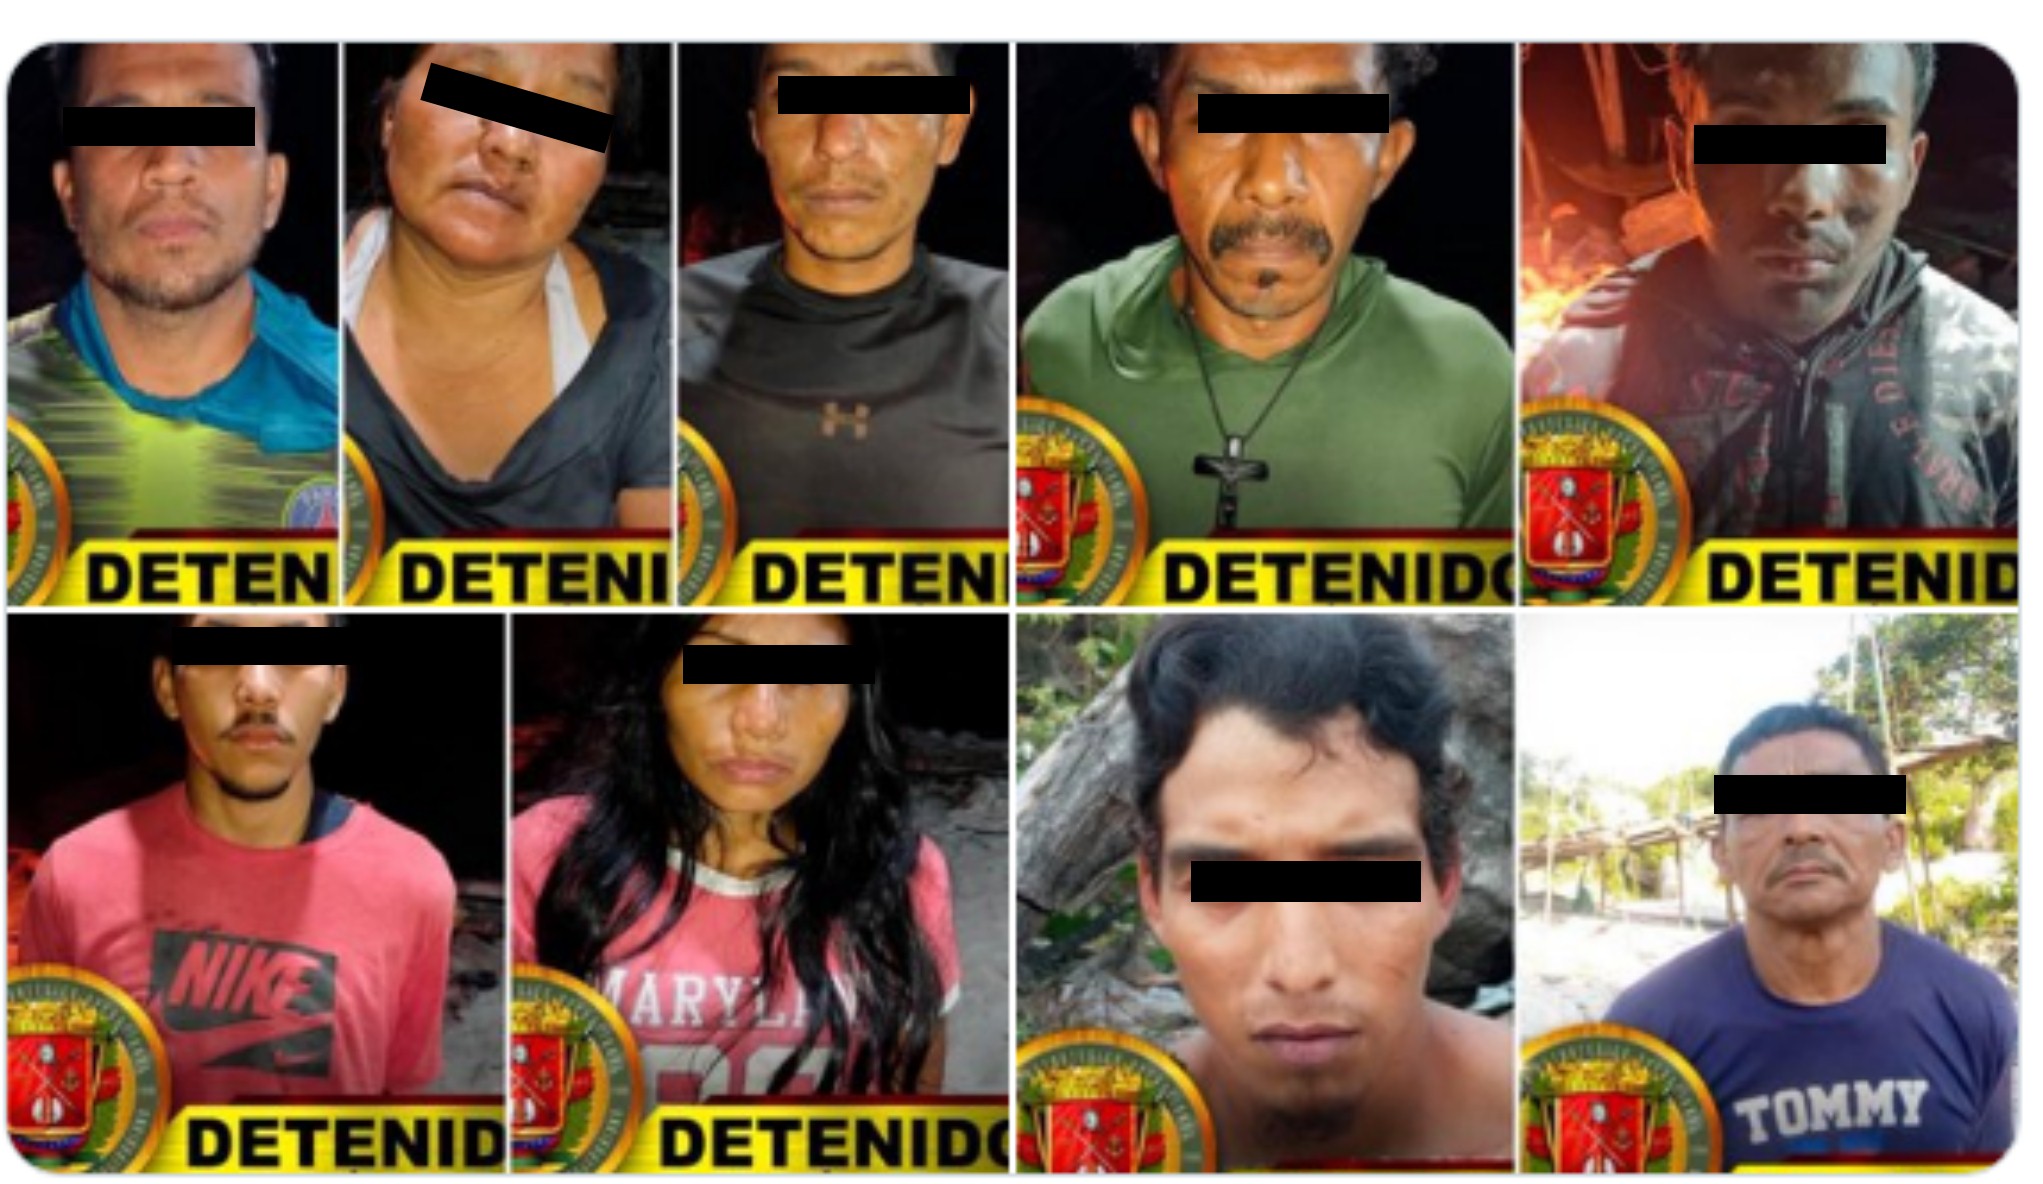 Detenidos en Amazonas por minería ilegal - Agencia Carabobeña de Noticia - Agencia ACN - Noticias sucesos